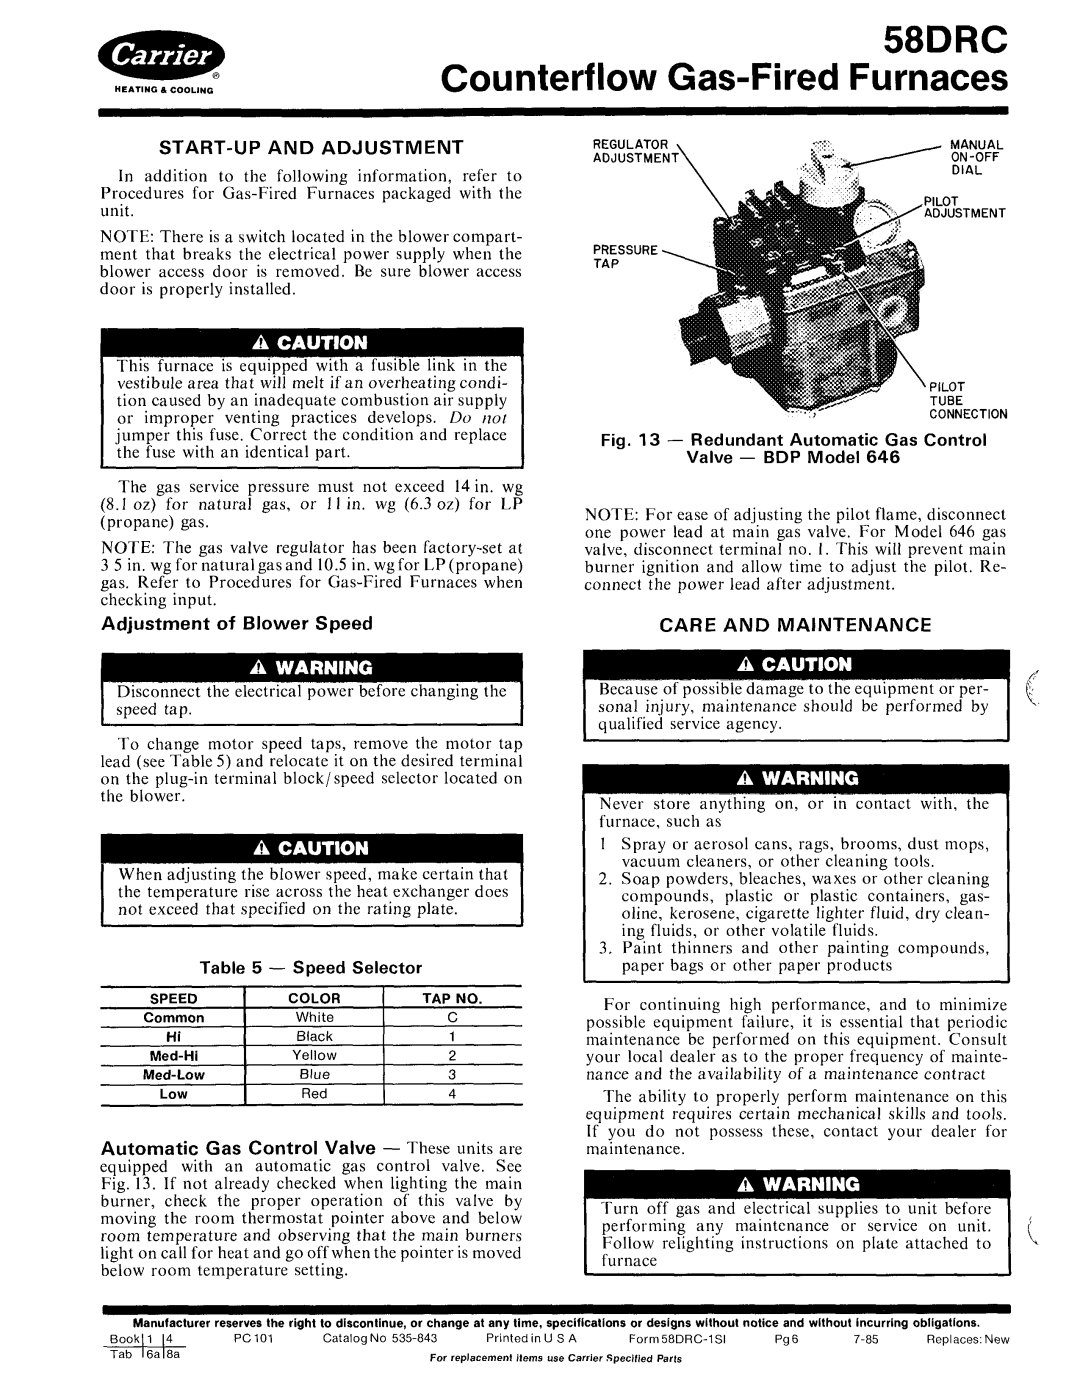 Carrier 58DRC manual 